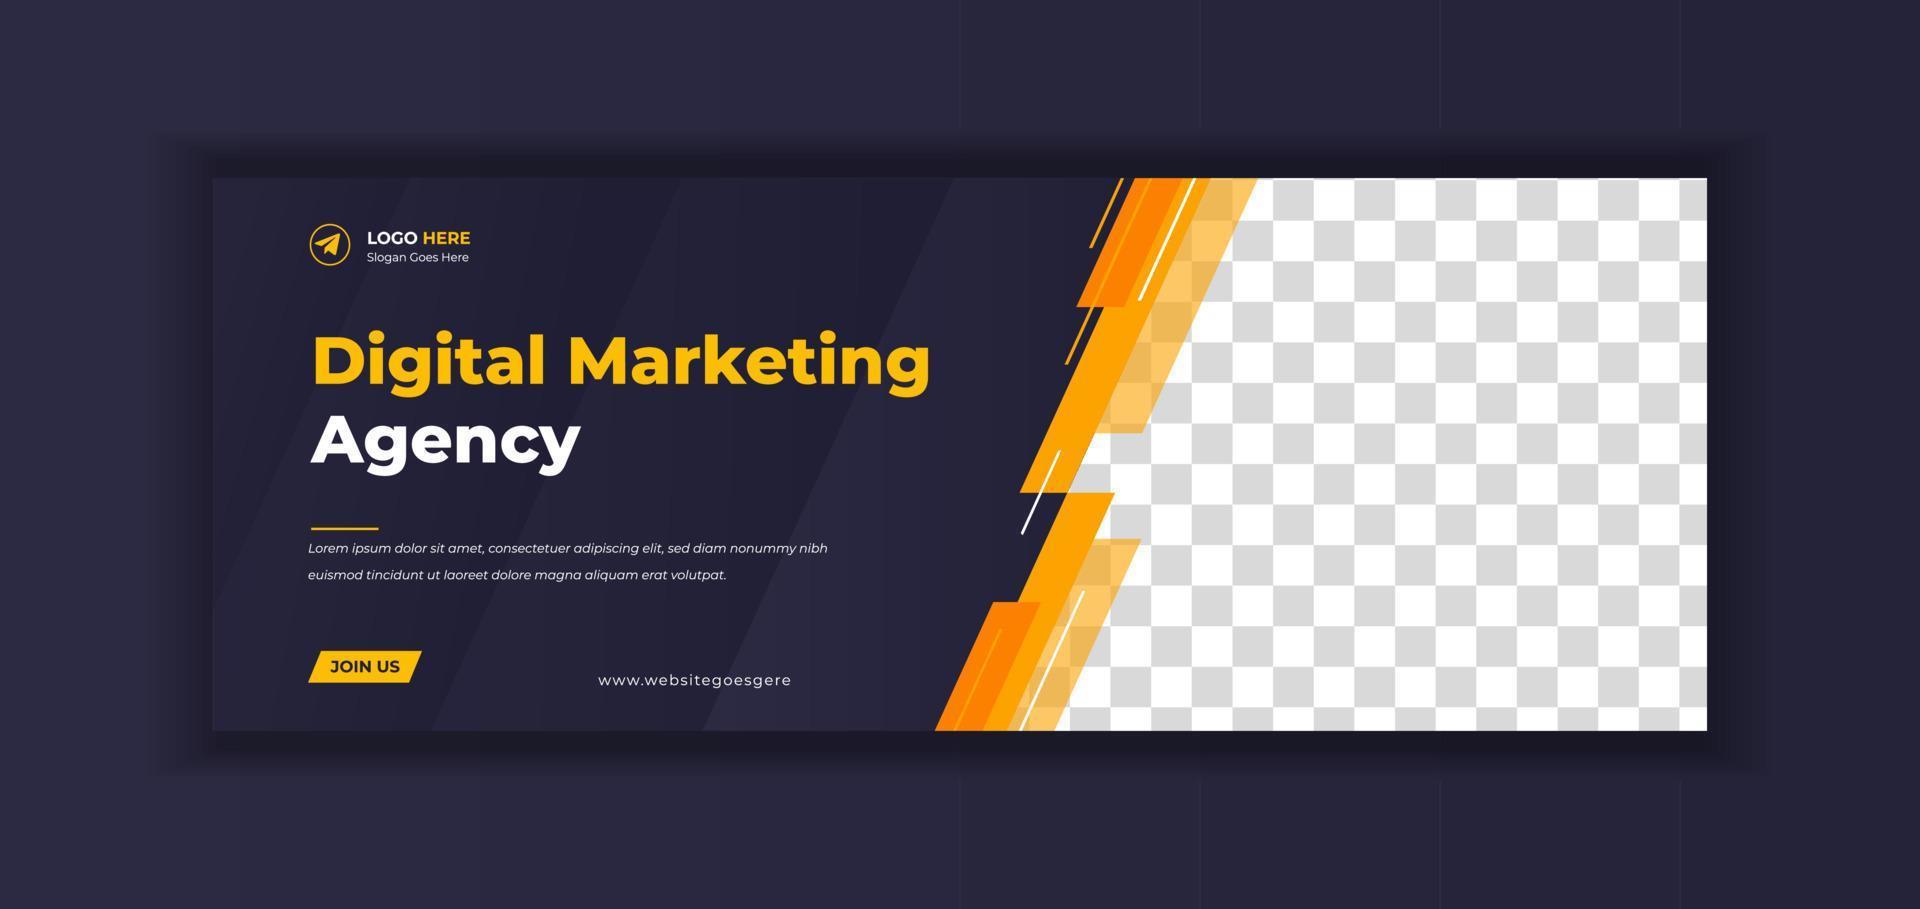 Digital marketing Social Media Cover photo Template Design . digital marketing agency web banner. digital marketing web banner design layout. web banner. social media cover design. vector